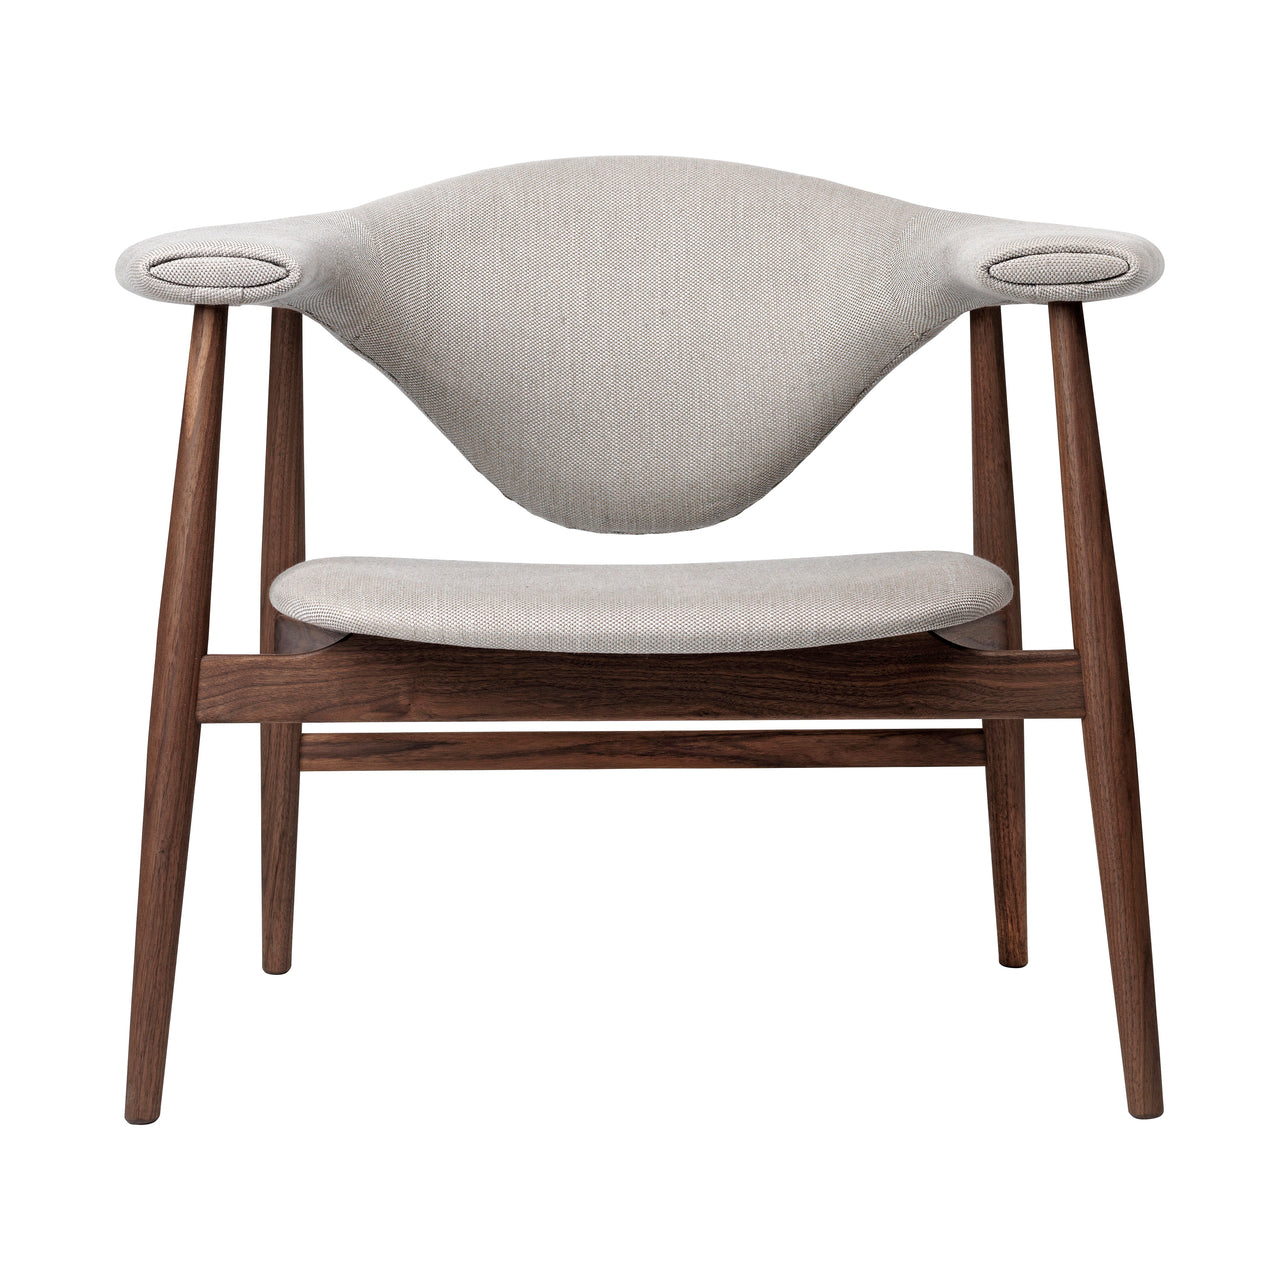 Masculo Lounge Chair: Wood Base + Oiled American Walnut